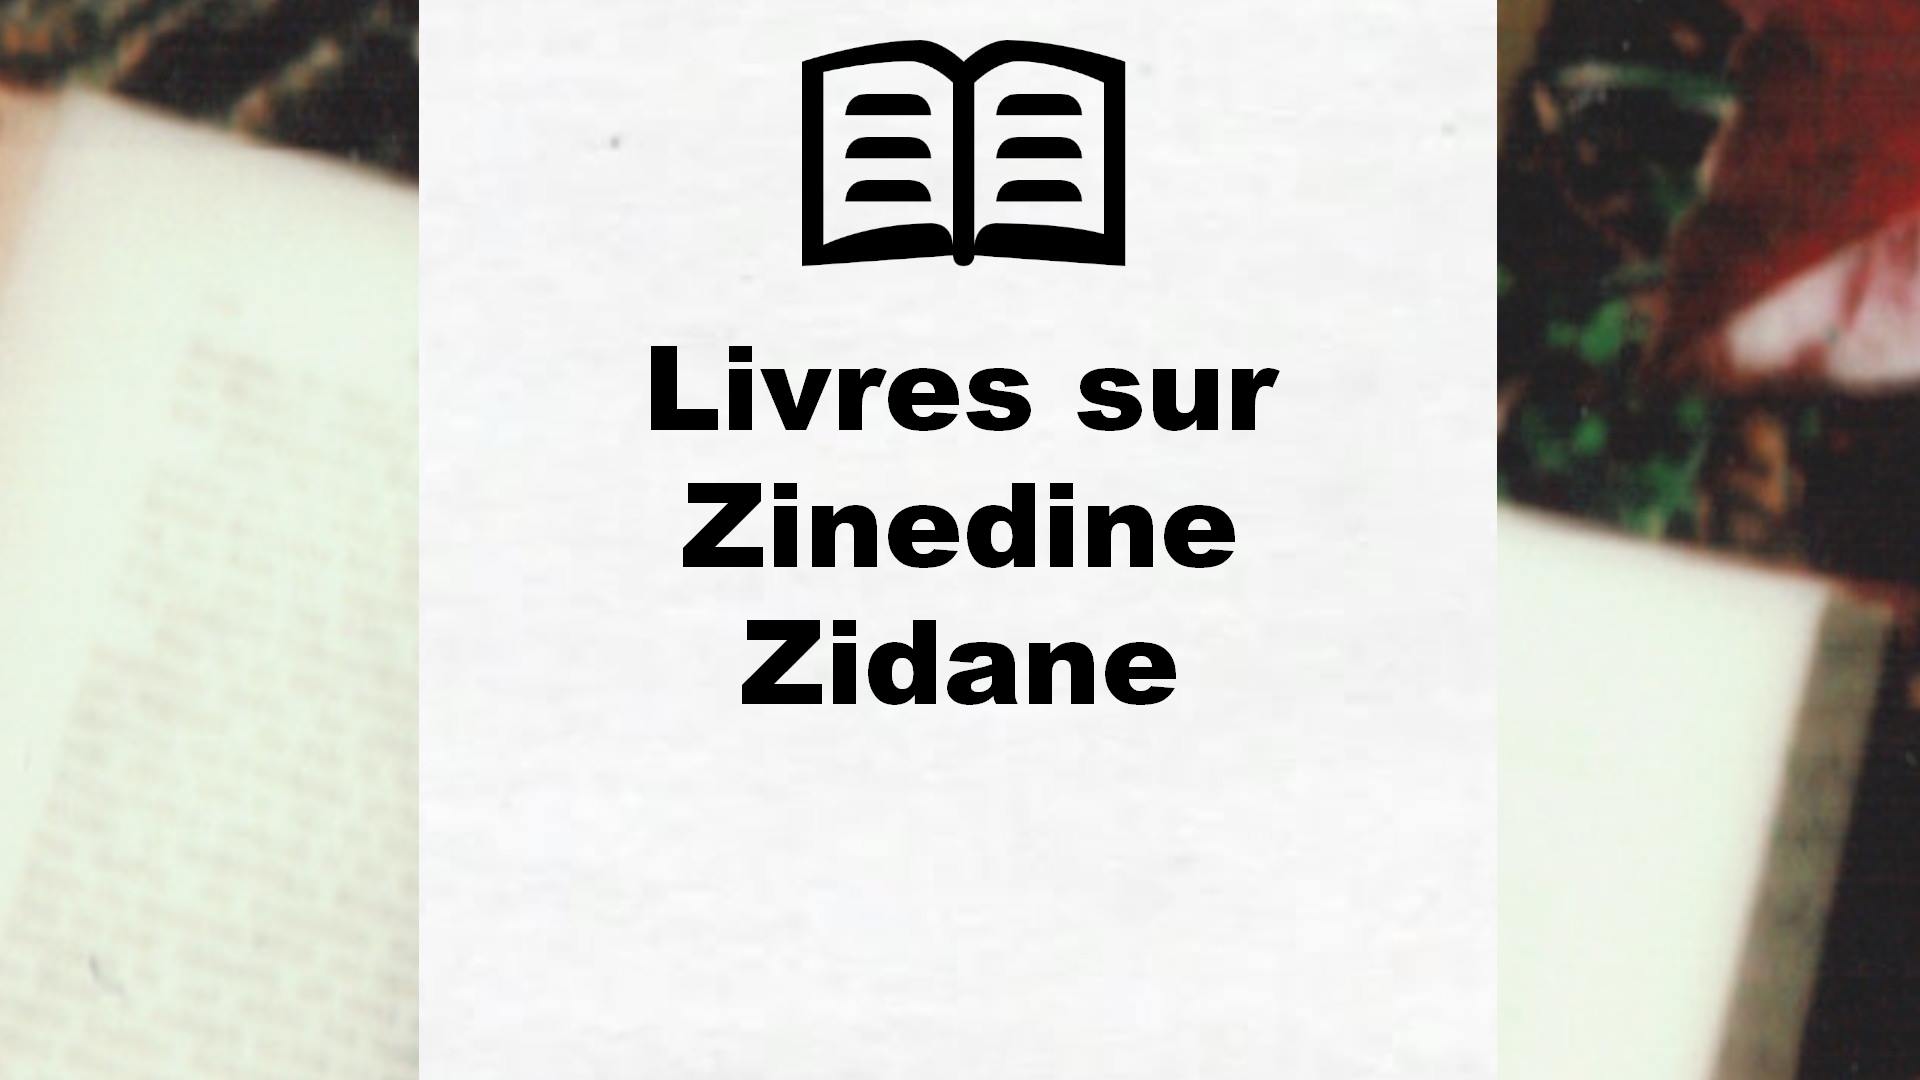 Livres sur Zinedine Zidane